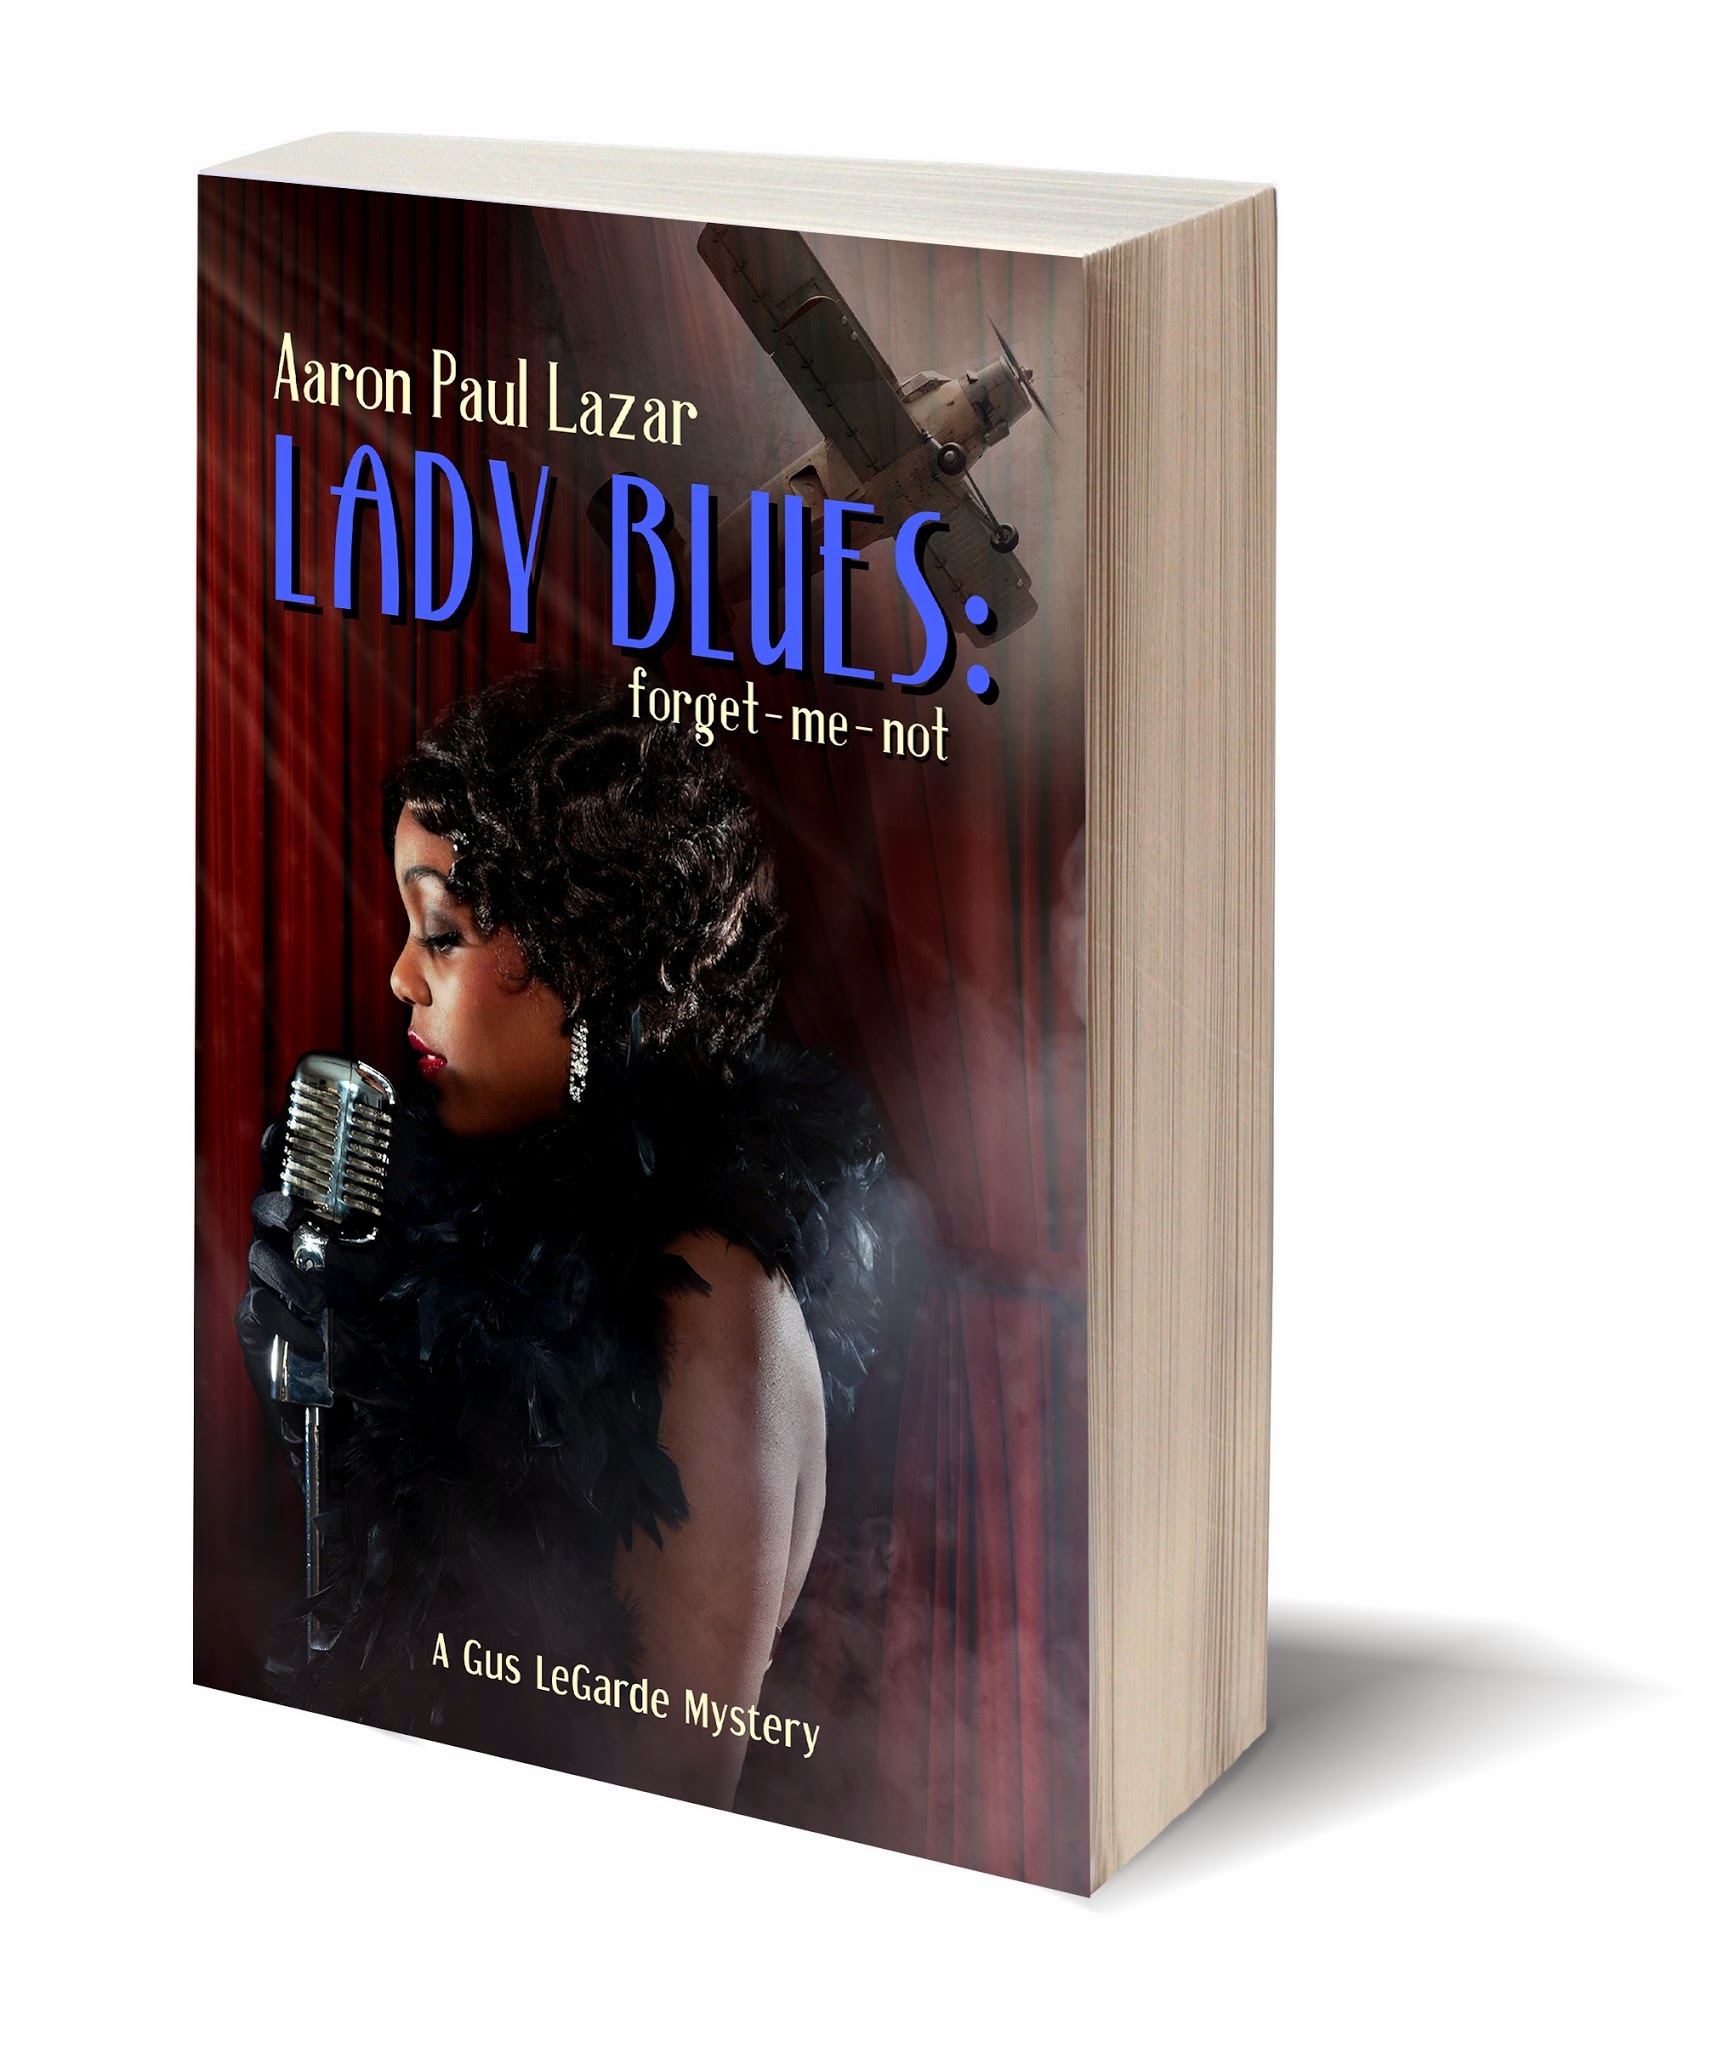 http://www.amazon.com/Lady-Blues-forget-me-not-LeGarde-Mysteries-ebook/dp/B00IS6EXG0/ref=sr_1_1?s=digital-text&ie=UTF8&qid=1395274623&sr=1-1&keywords=lady+blues